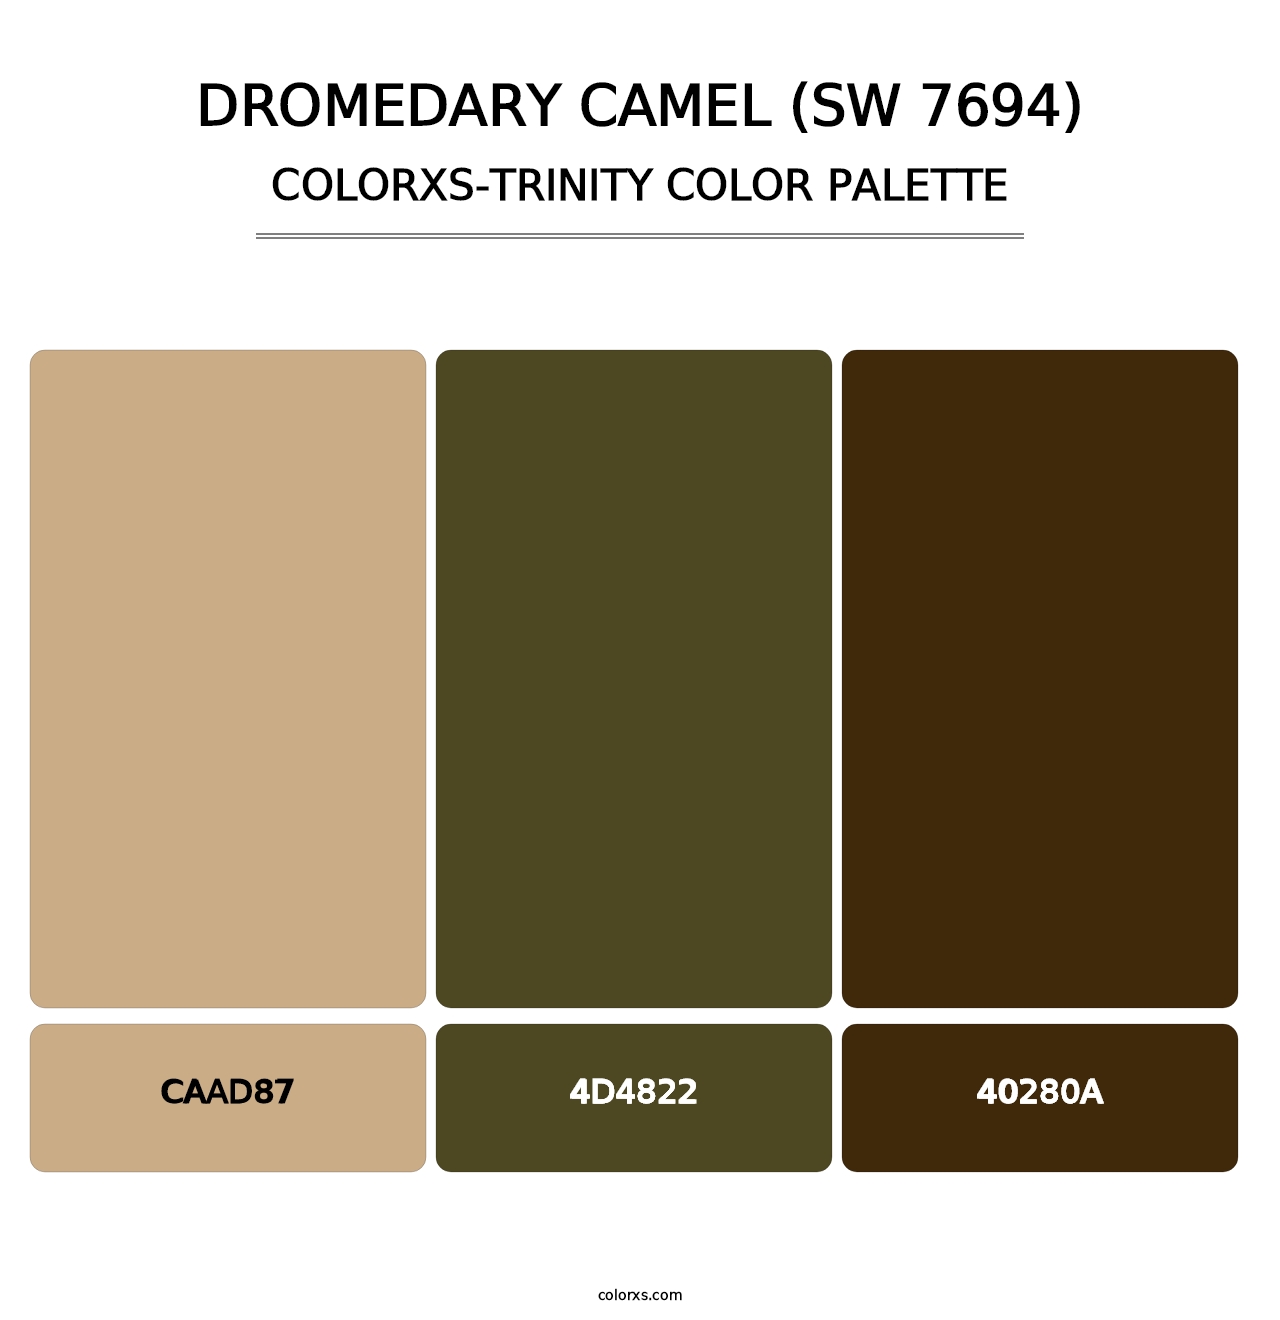 Dromedary Camel (SW 7694) - Colorxs Trinity Palette